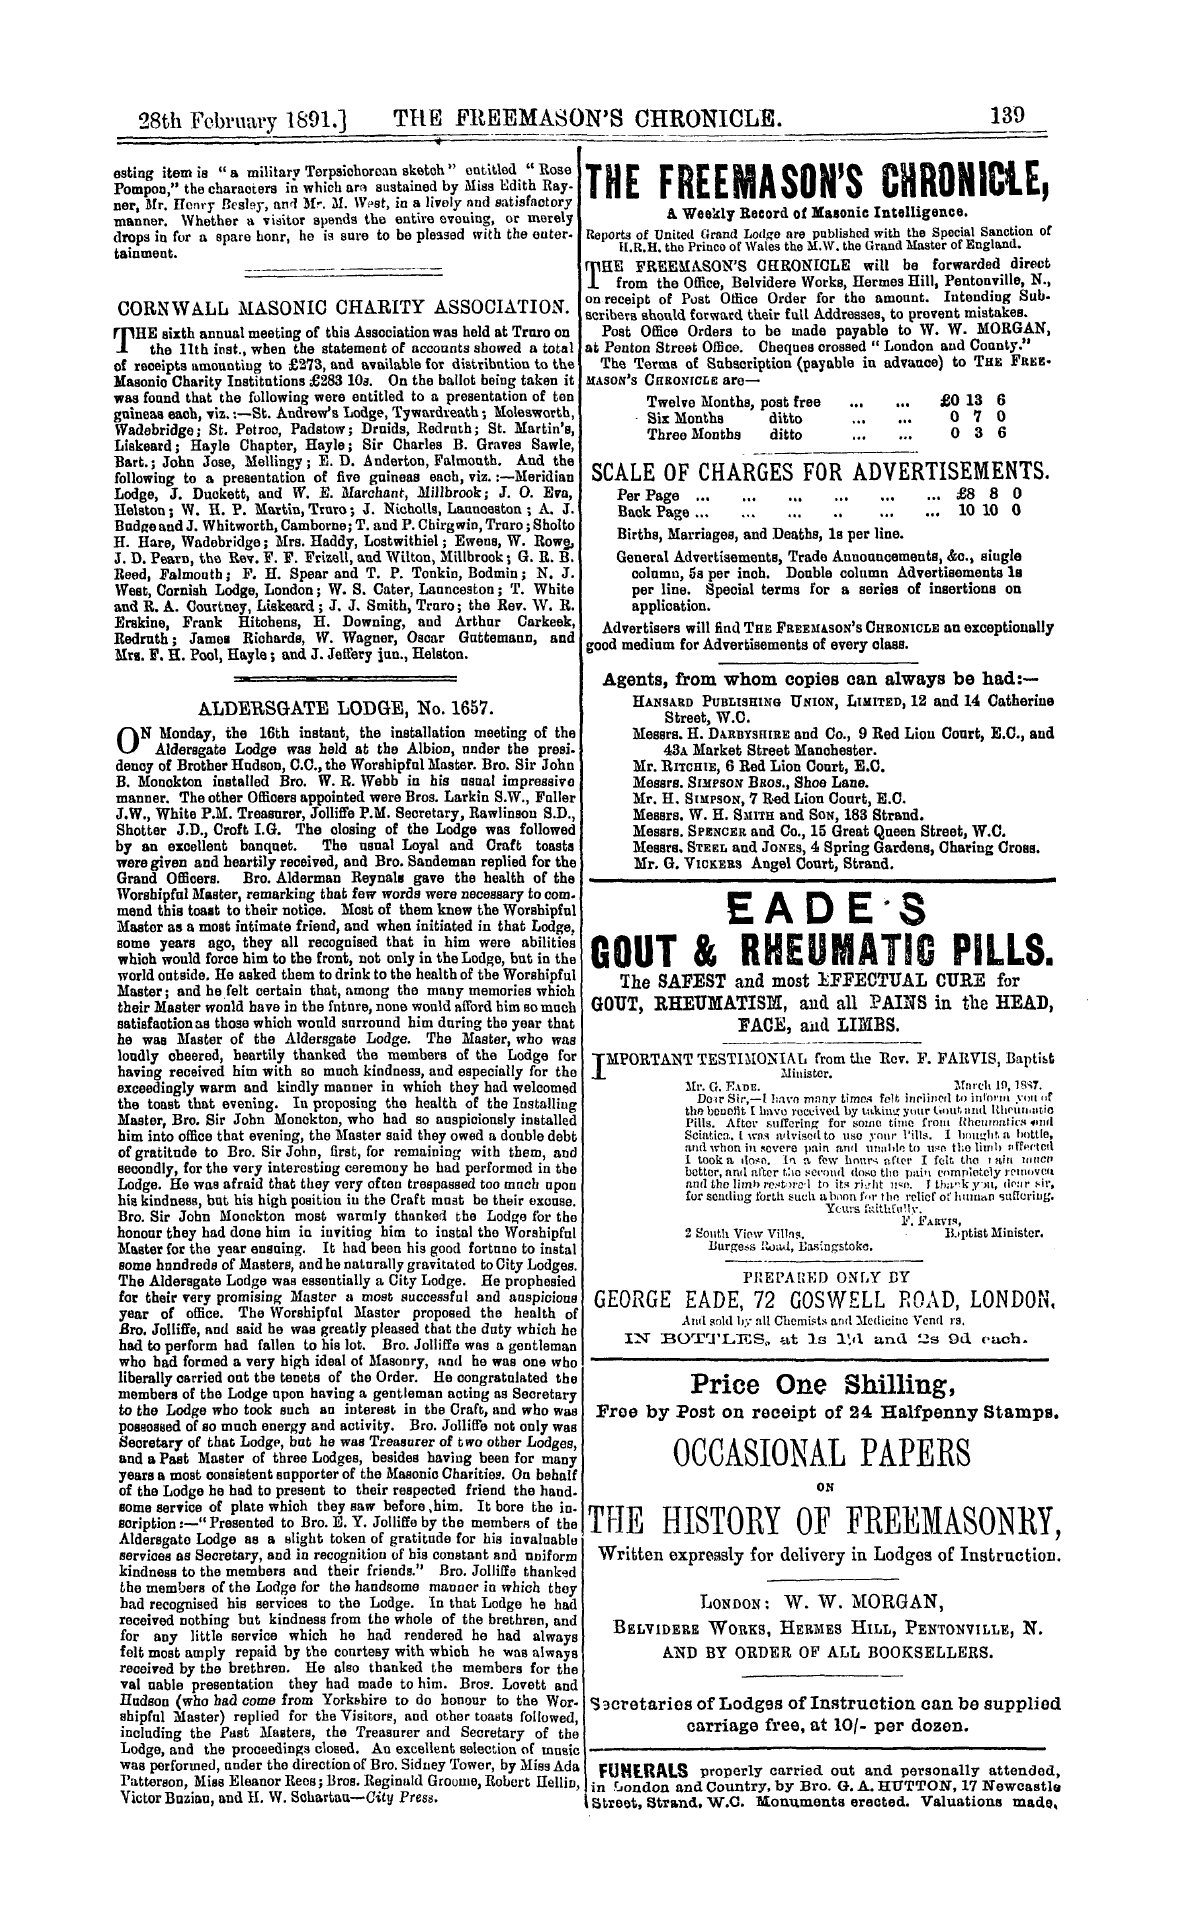 The Freemason's Chronicle: 1891-02-28 - The Theatres, &C.